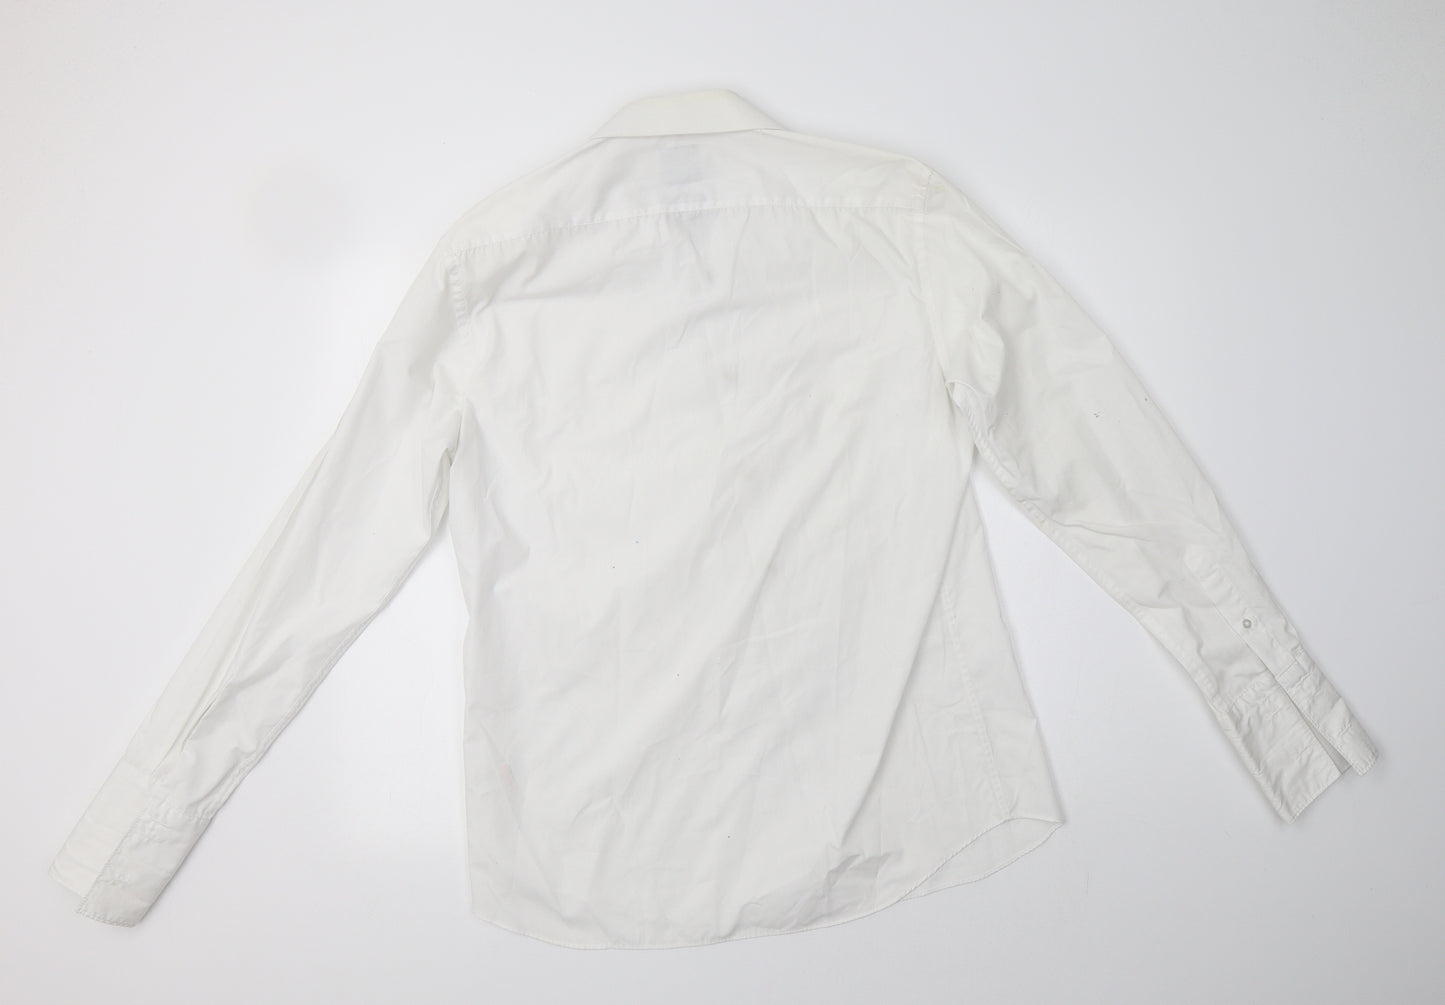 Matalan Mens White  Cotton  Dress Shirt Size 15.5 Collared